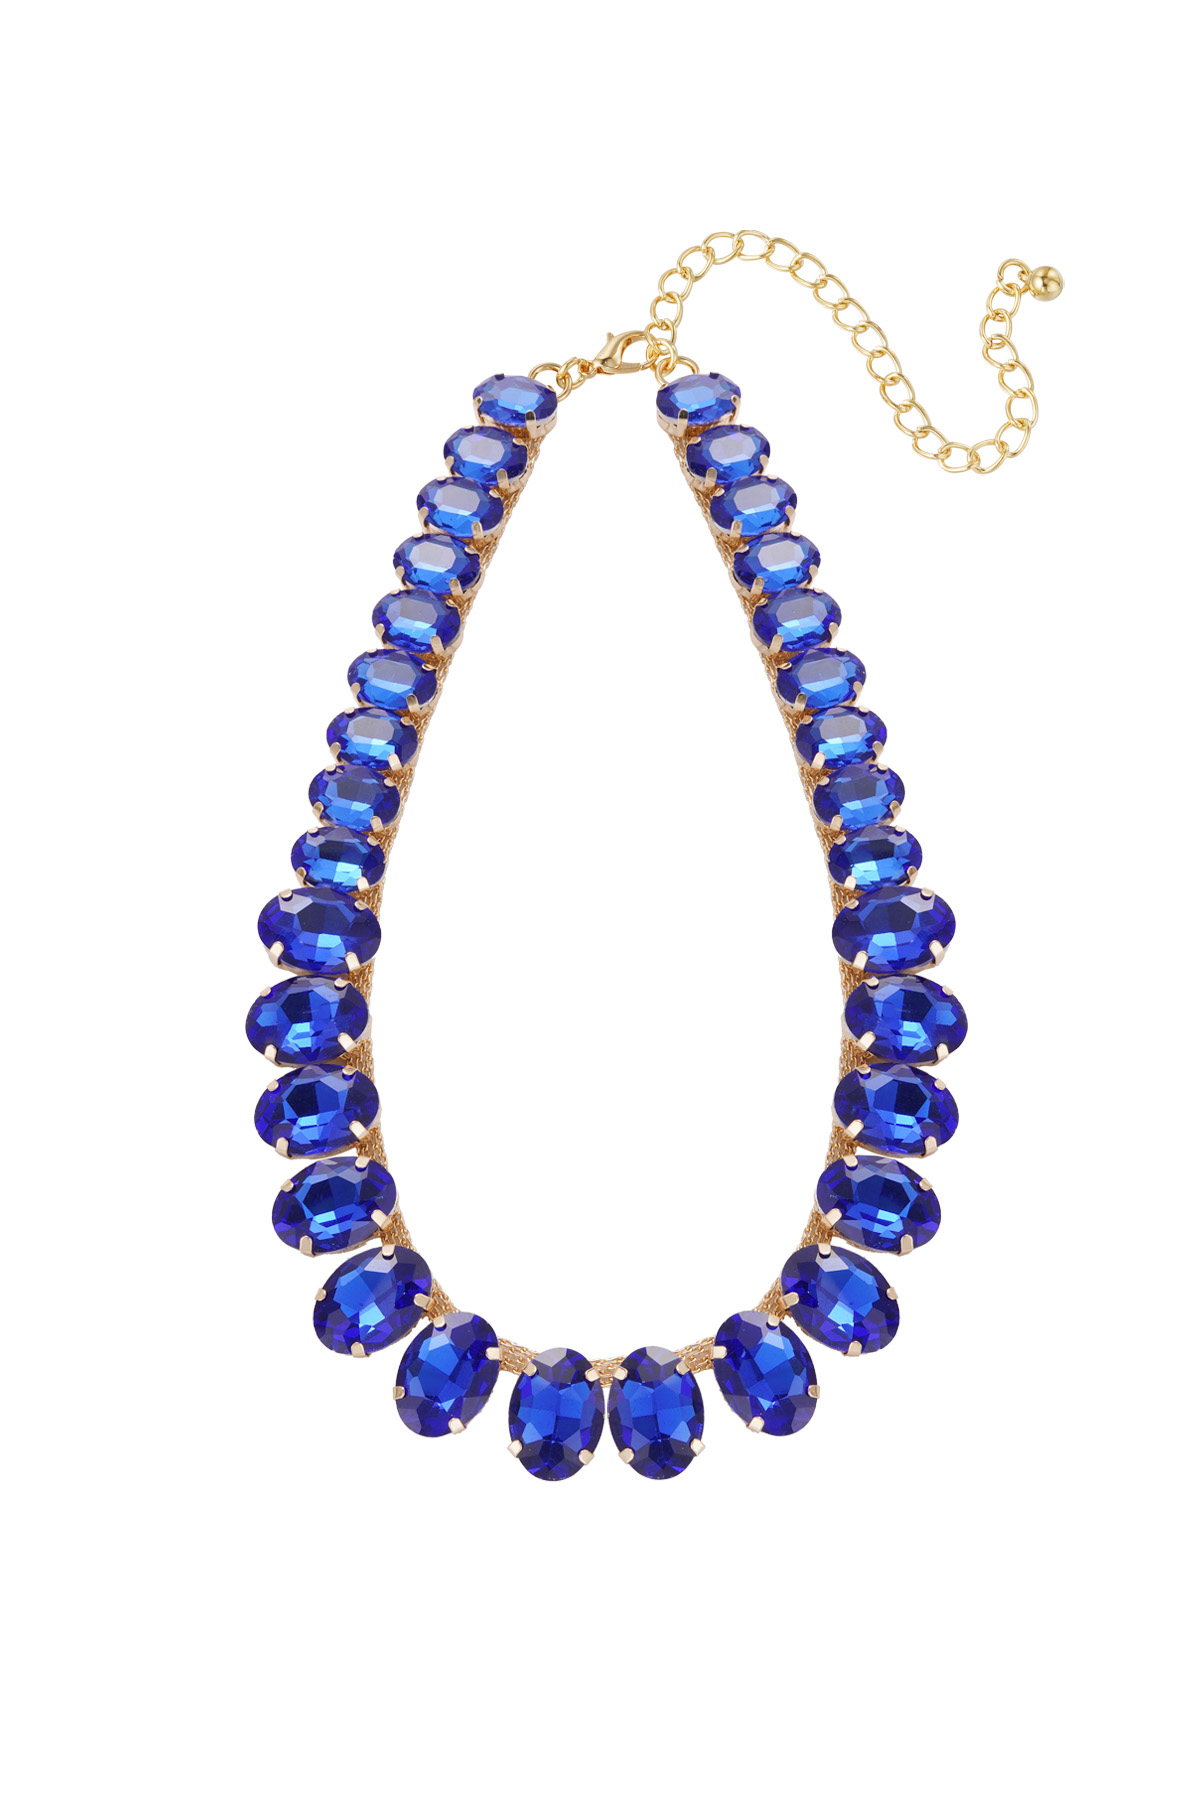 Halskette große ovale Perlen - blau h5 